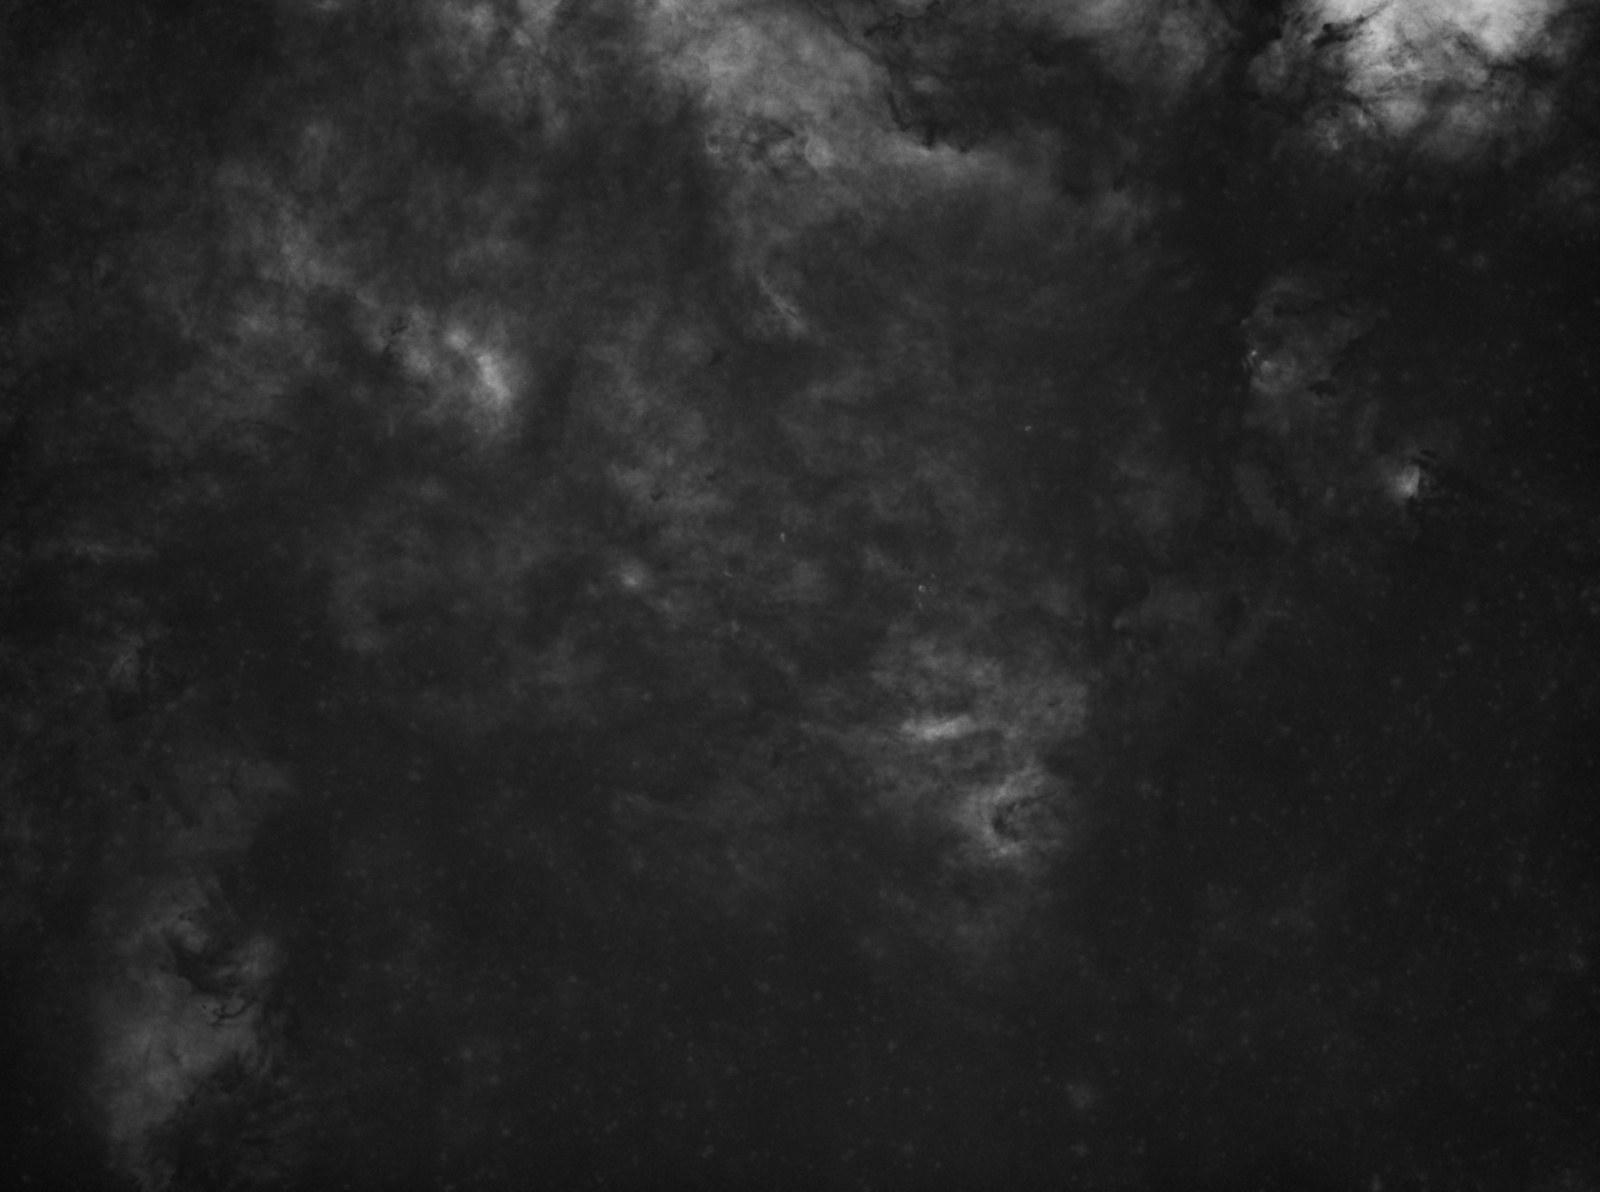 Cygnus OB2_Ha_starless.jpg